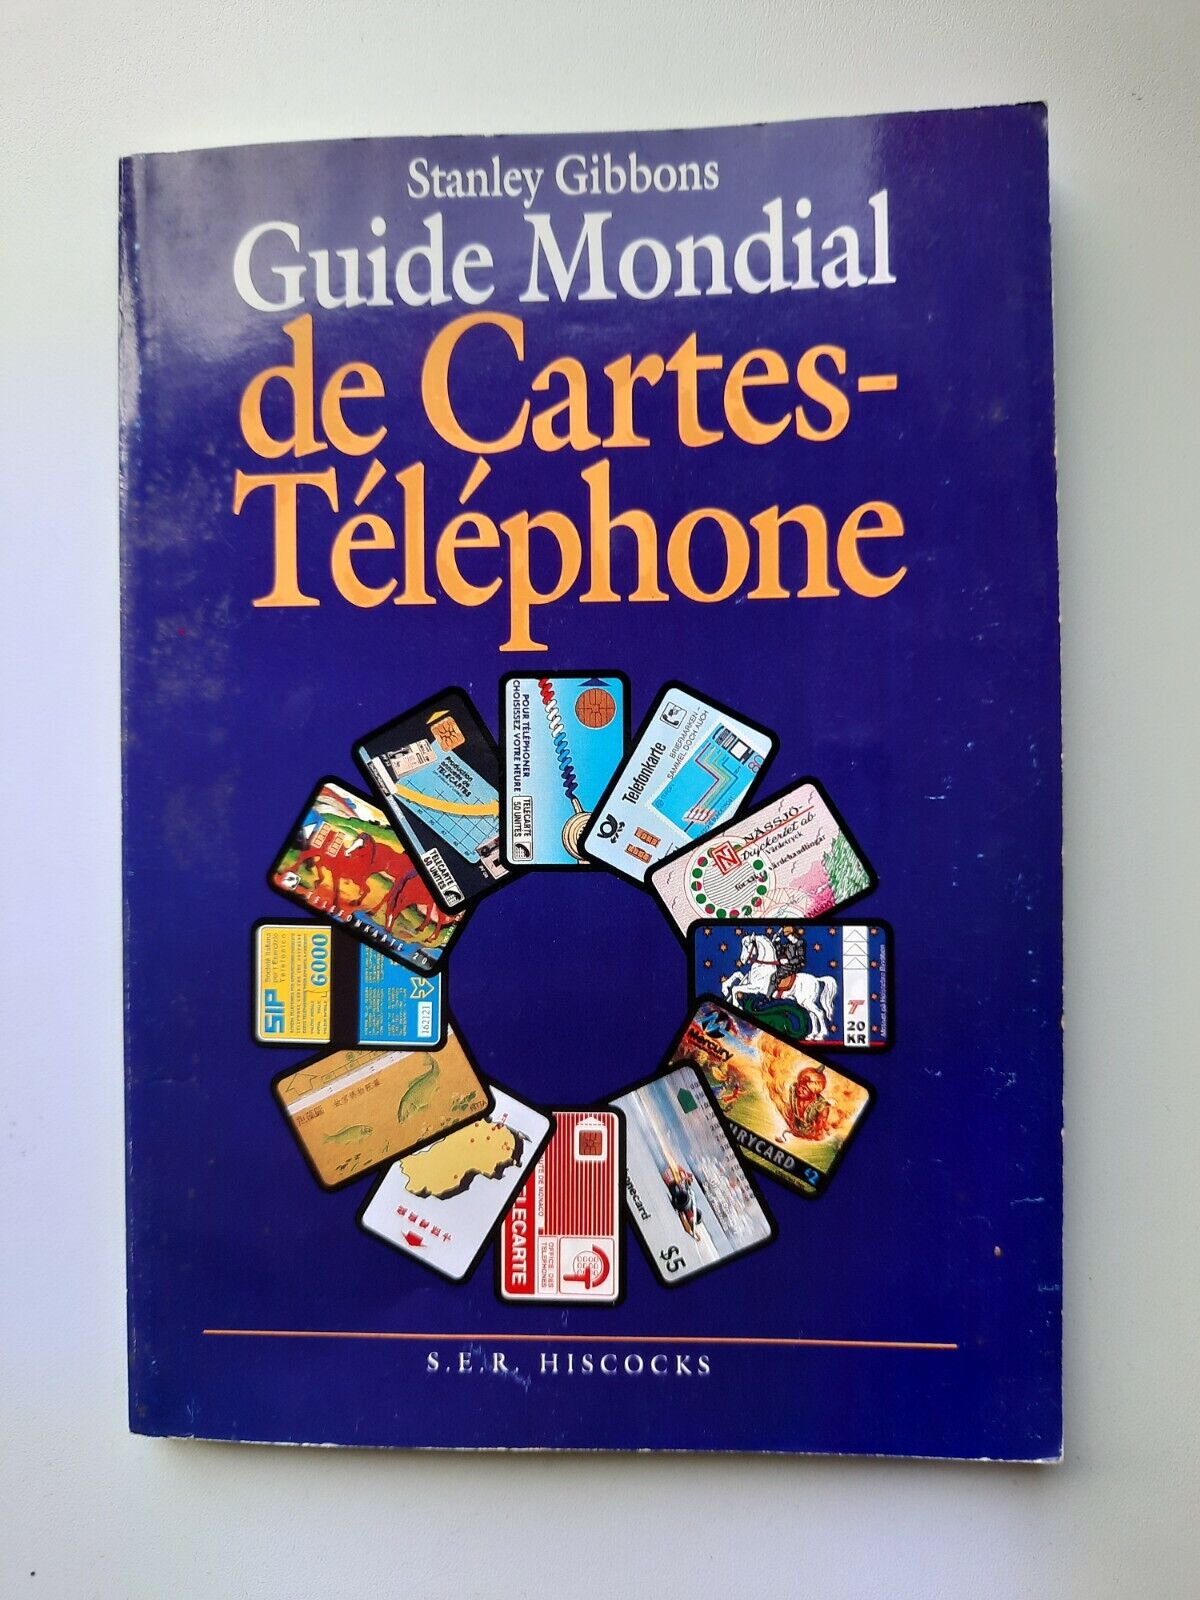  STANLEY GIBBONS GUIDE MONDIAL de Cartes-Telephone